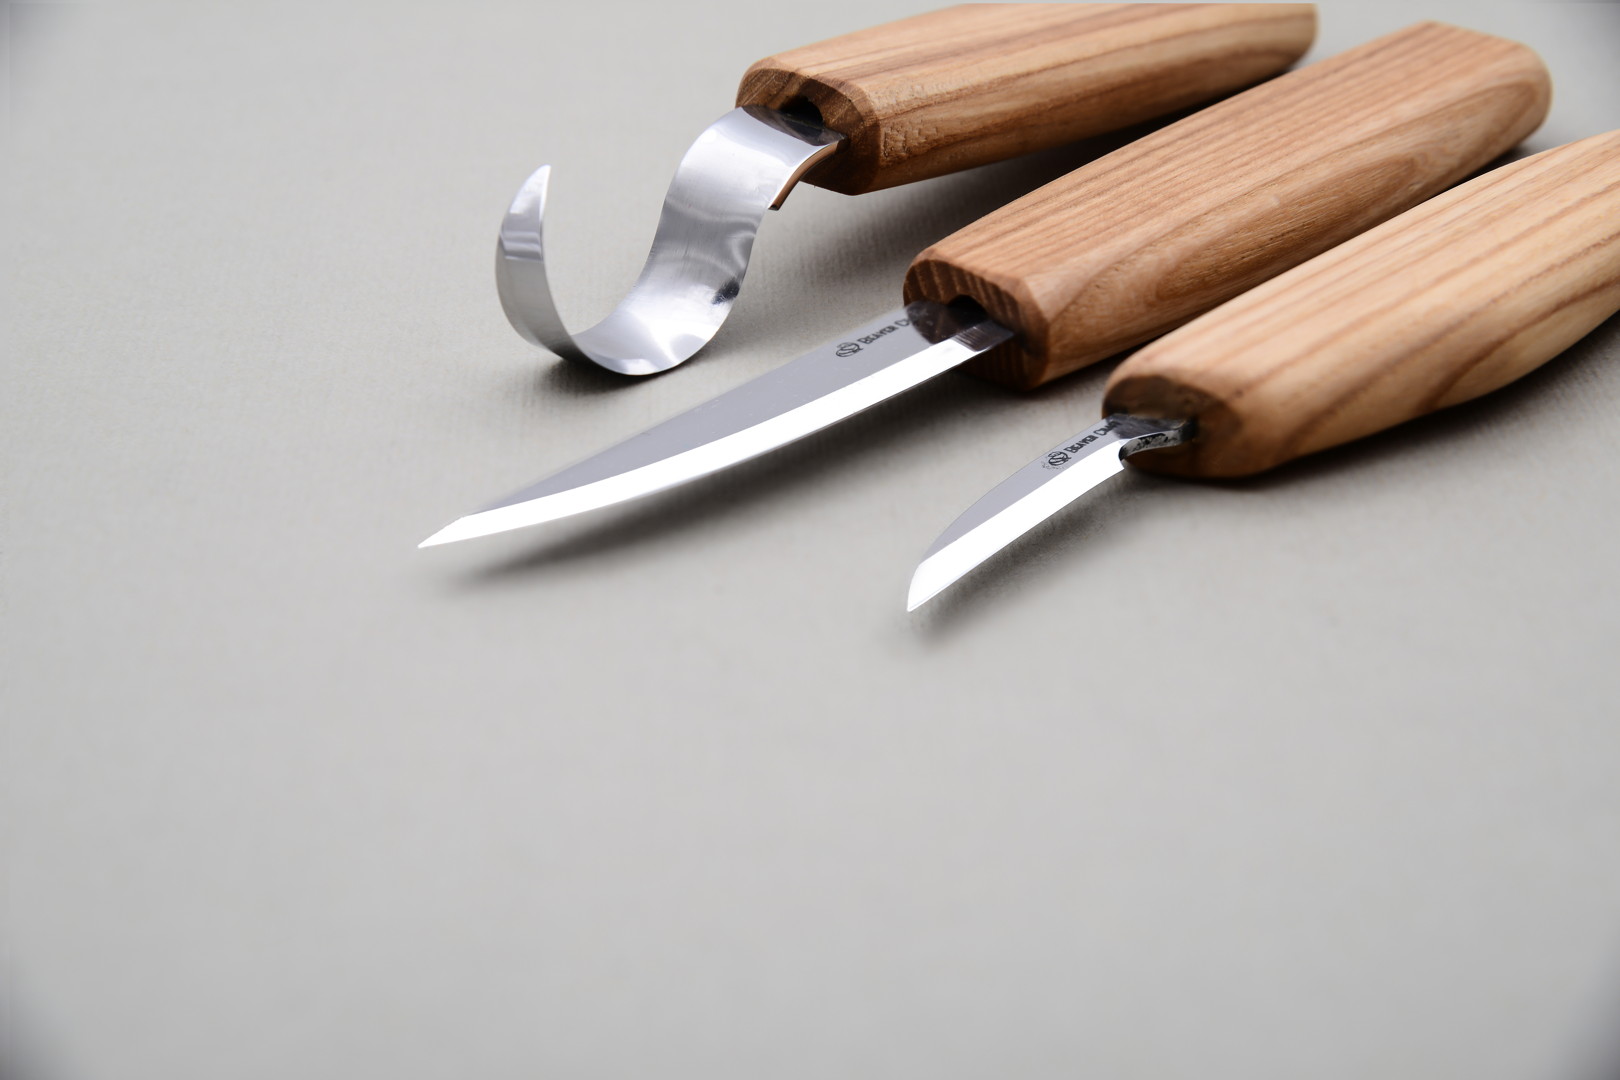 BeaverCraft S13 Spoon Carving Tool Set - Samcraft